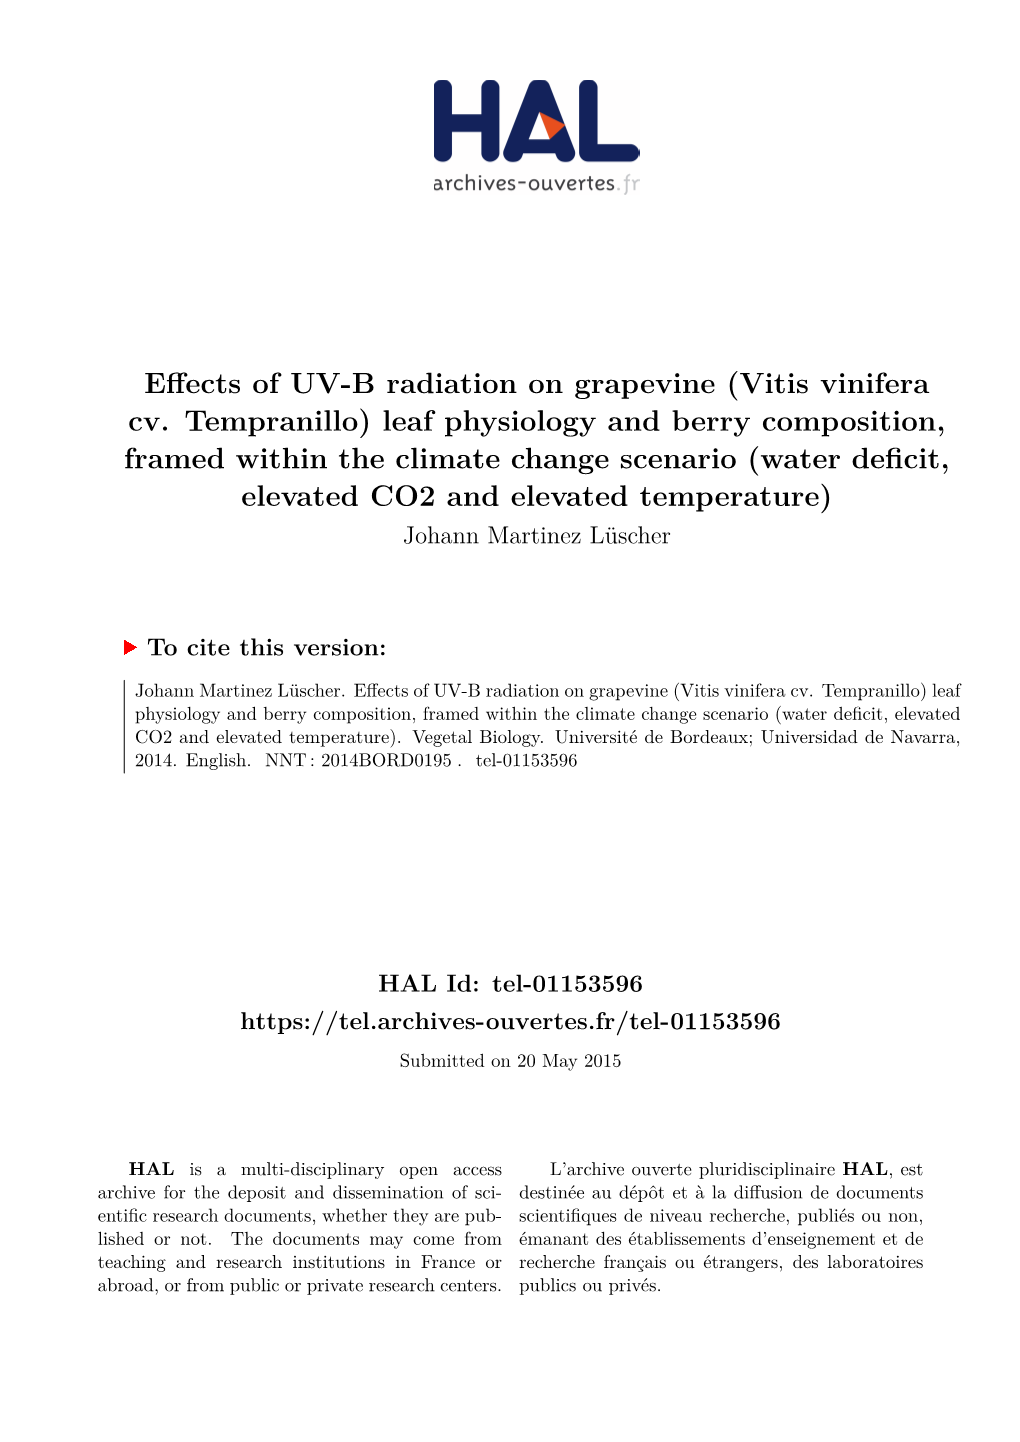 Effects of UV-B Radiation on Grapevine (Vitis Vinifera Cv. Tempranillo) Leaf